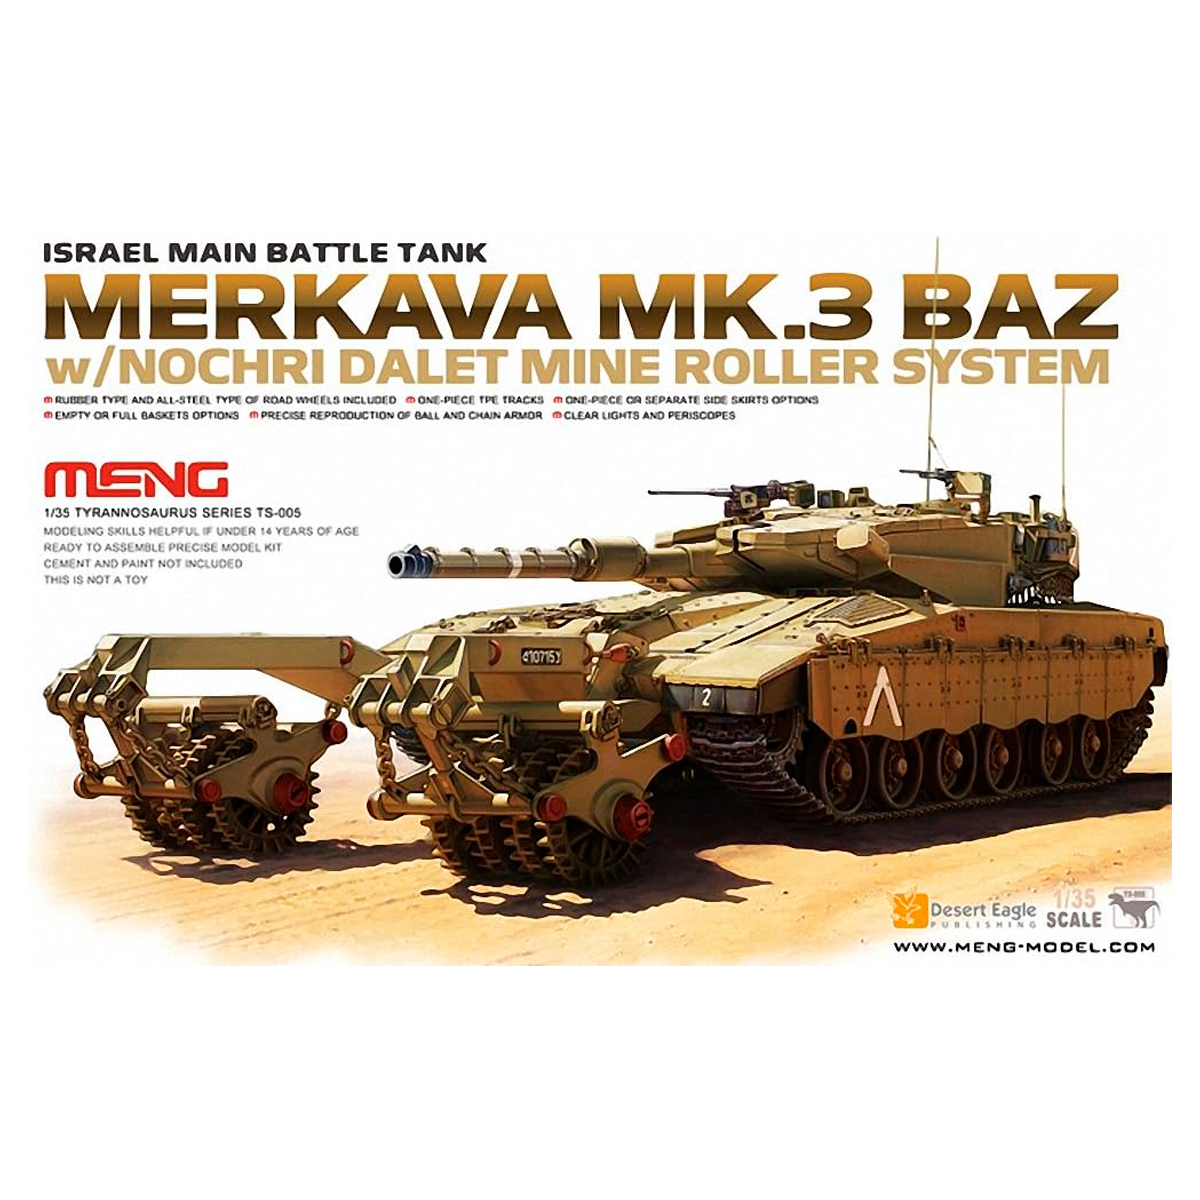 1/35 MERKAVA Mk.3 BAZ w/NOCHRI DALET MINE ROLLER SYSTEM